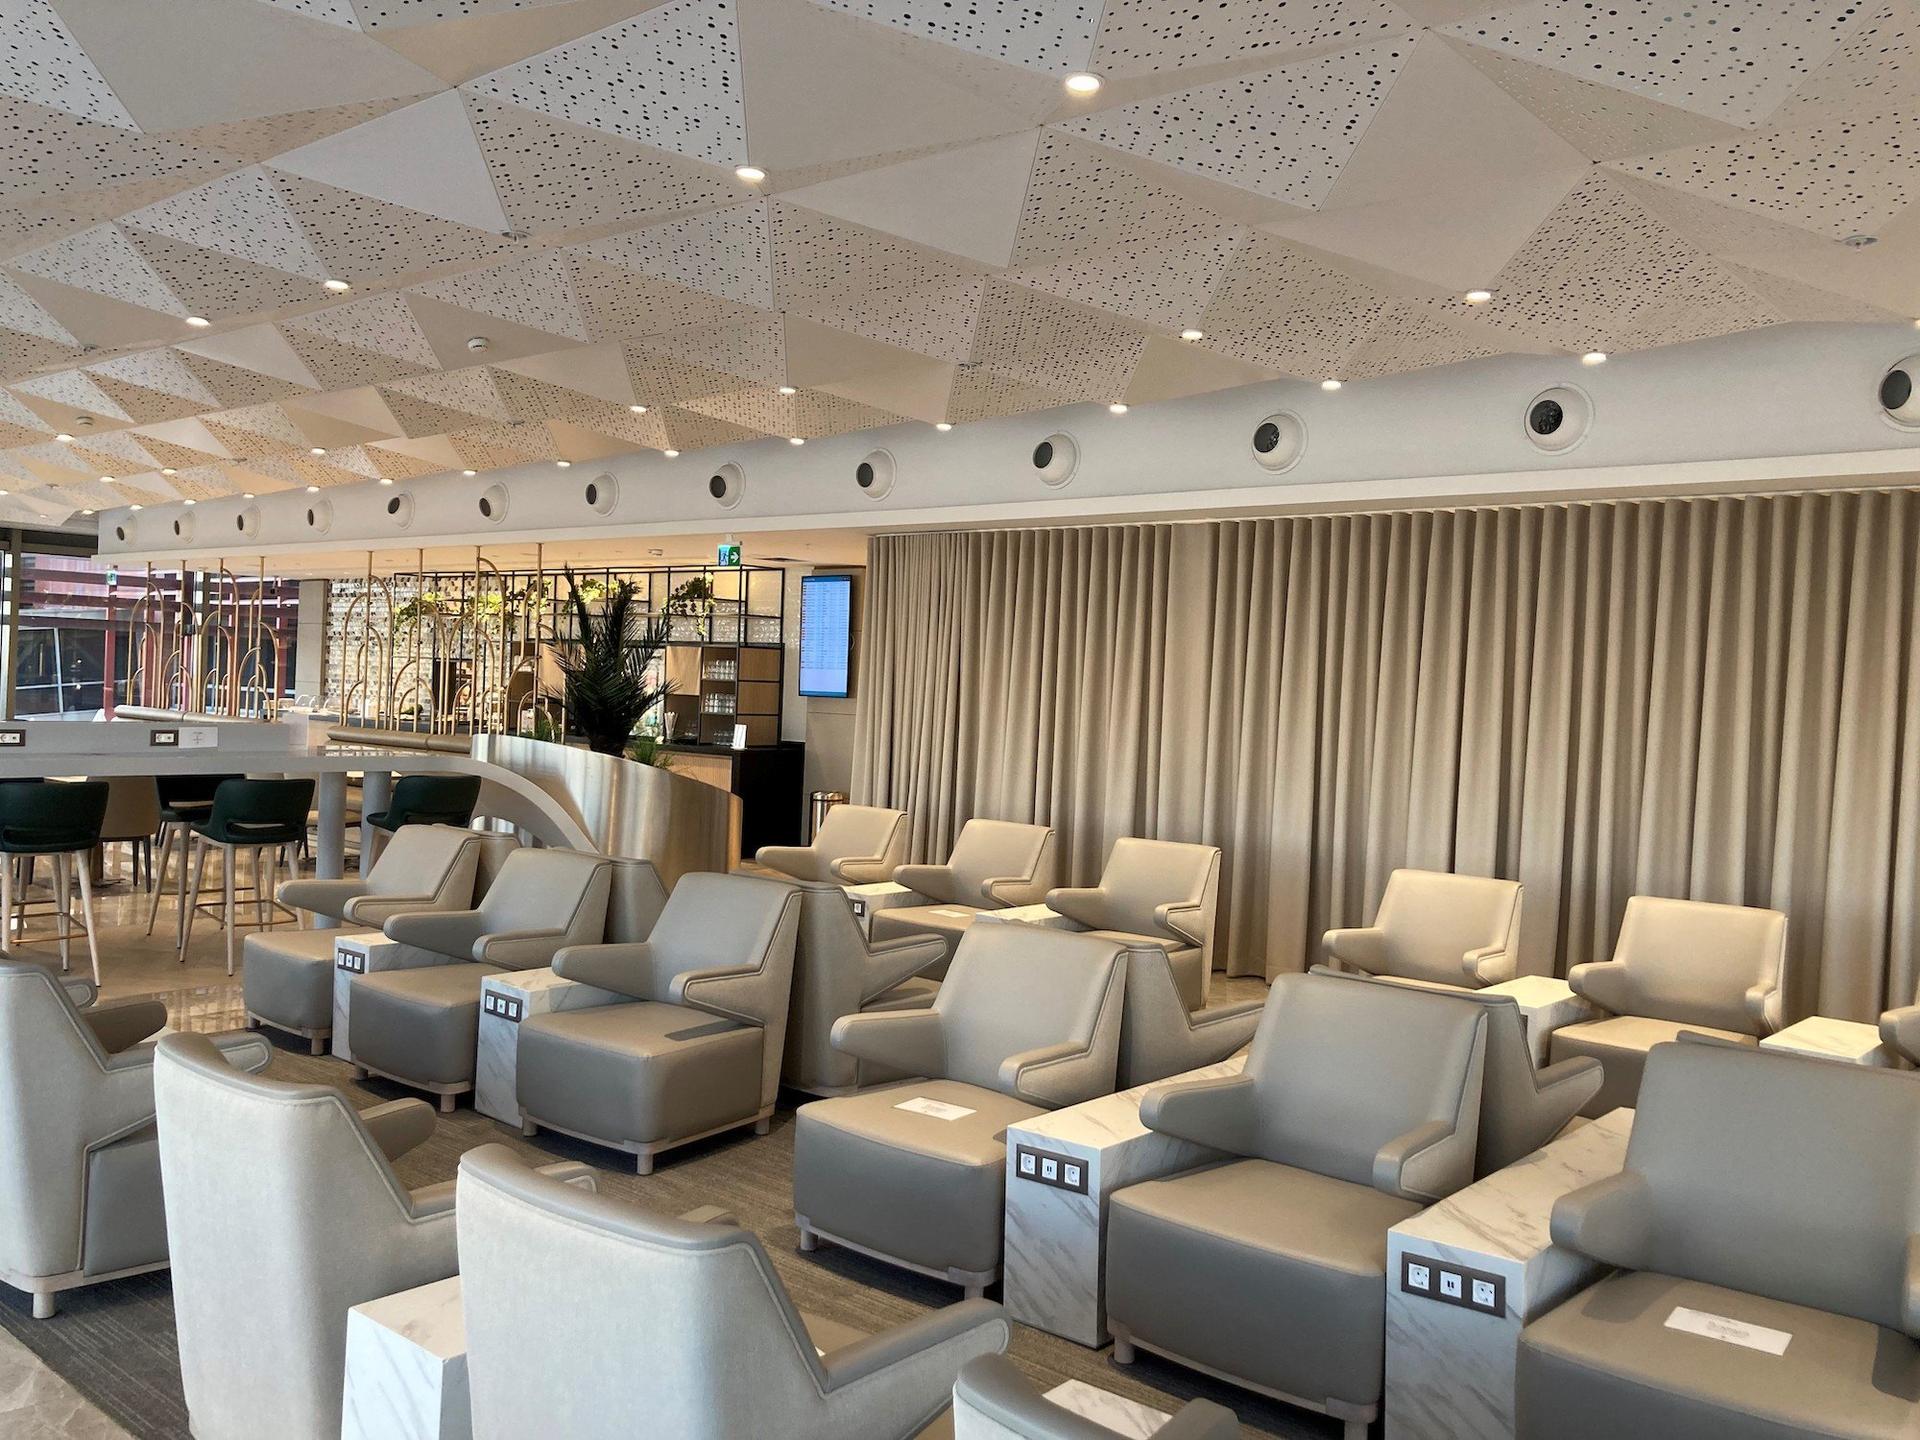 Plaza Premium Lounge (Bosphorus) image 6 of 7